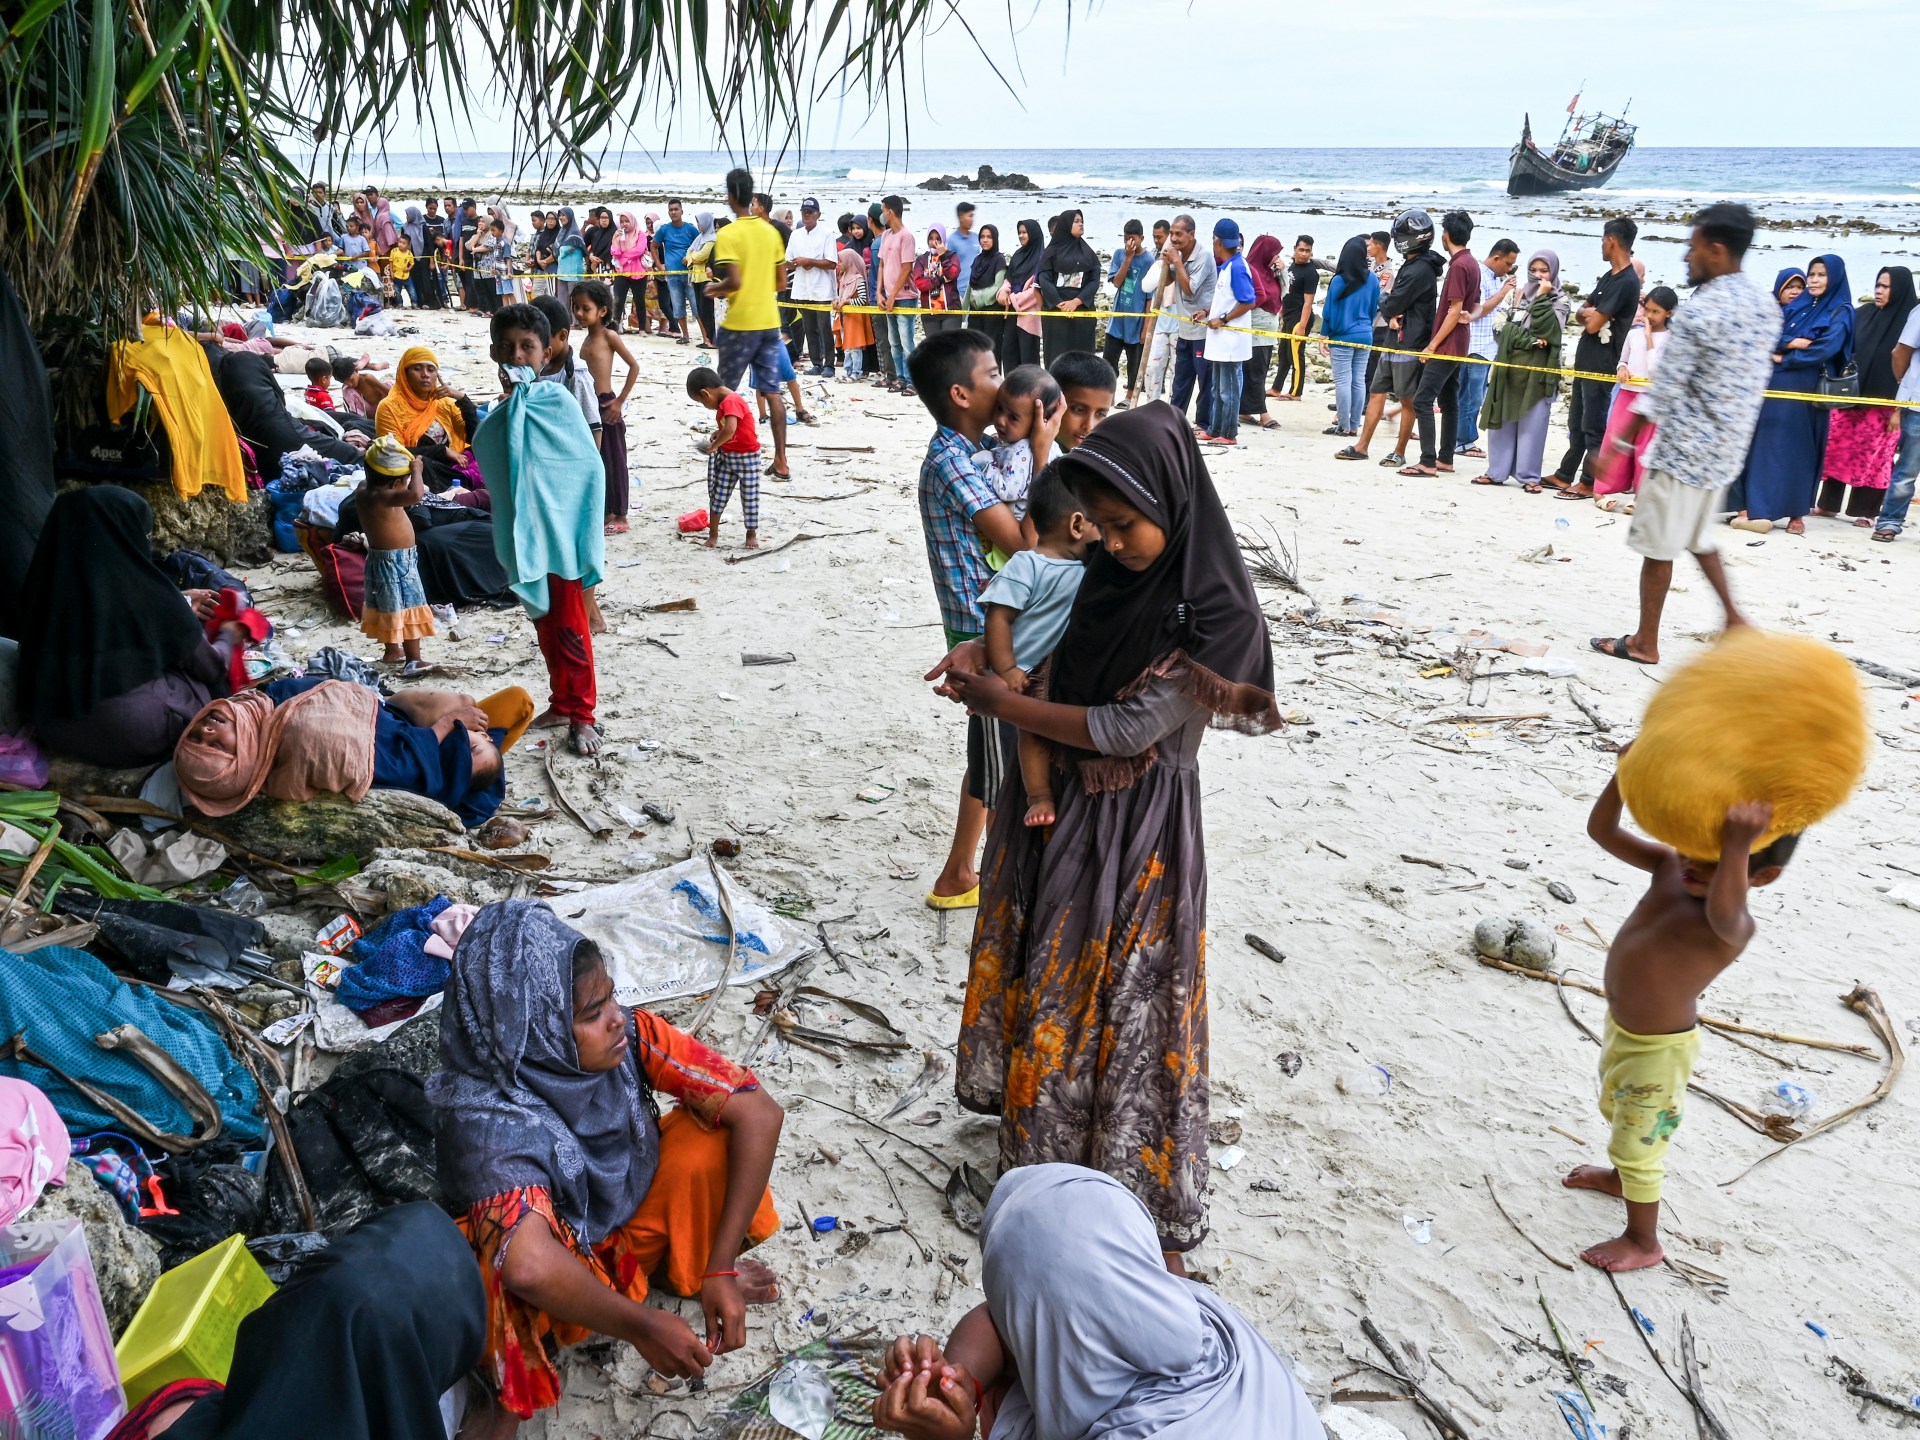 Rohingya refugees reach Indonesia shores in latest boat arrival | Rohingya News #Rohingya #refugees #reach #Indonesia #shores #latest #boat #arrival #Rohingya #News